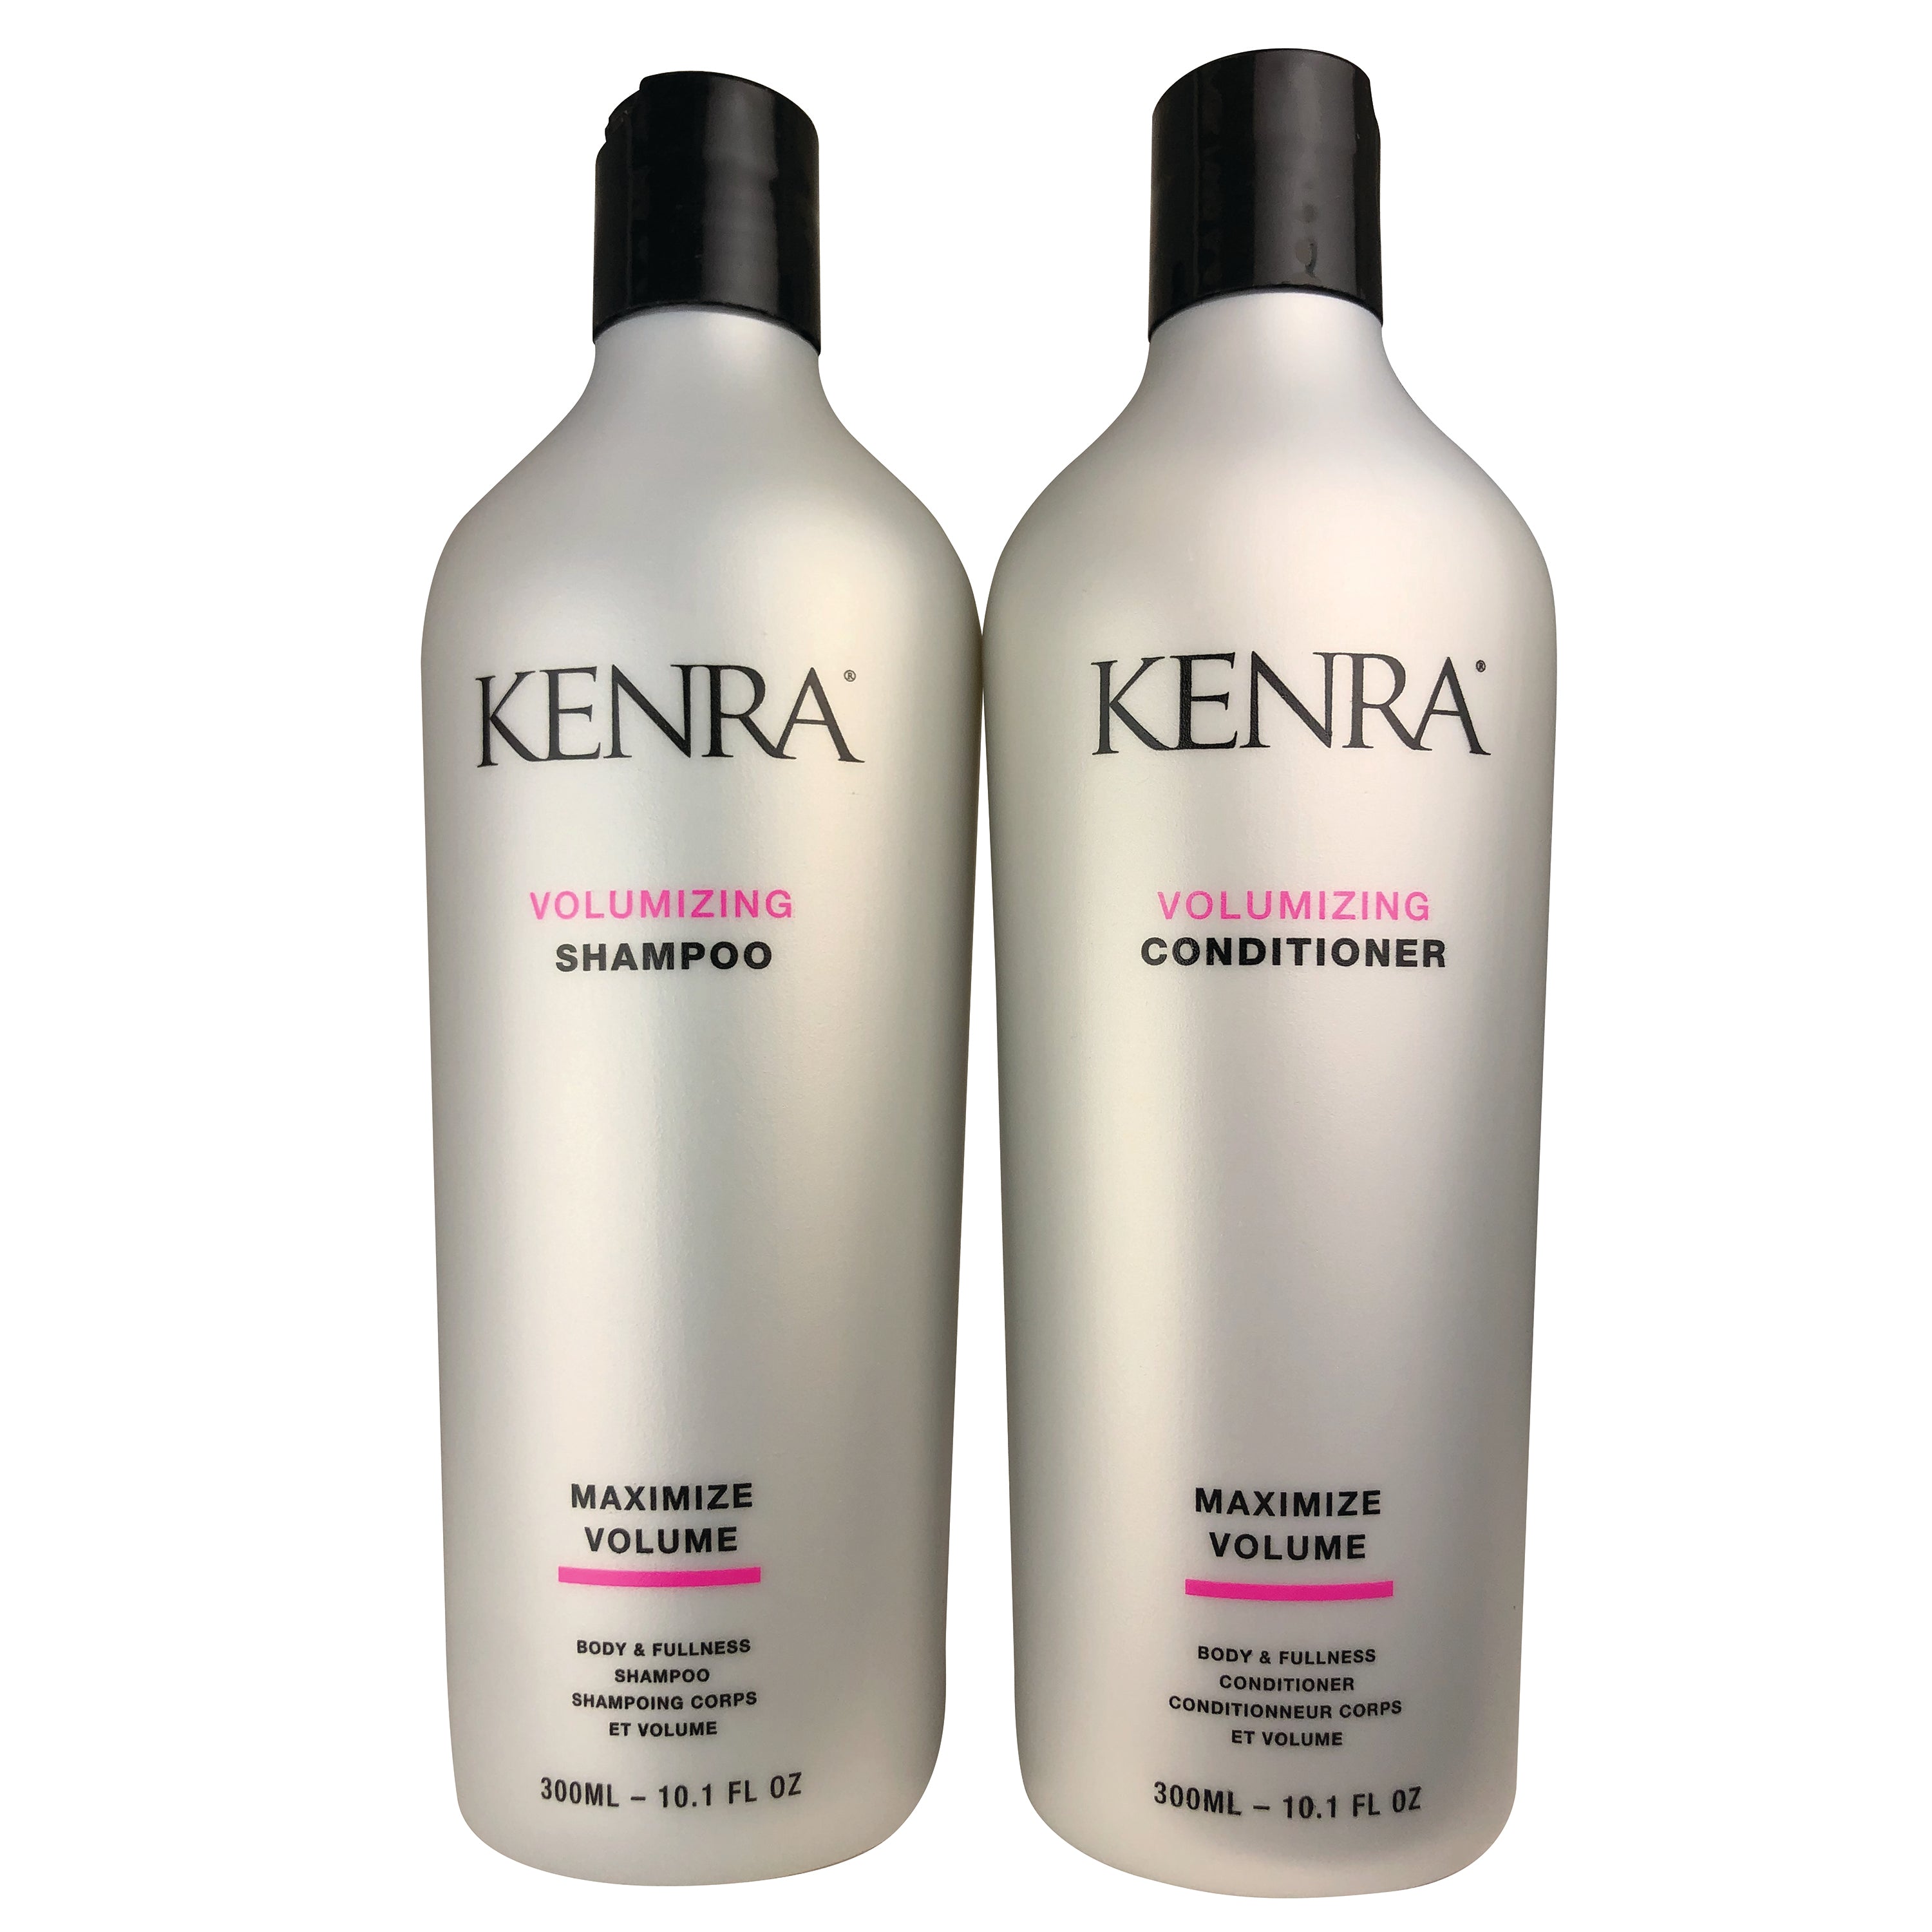 Kenra Volumizing Duo (Shampoo and Conditioner)